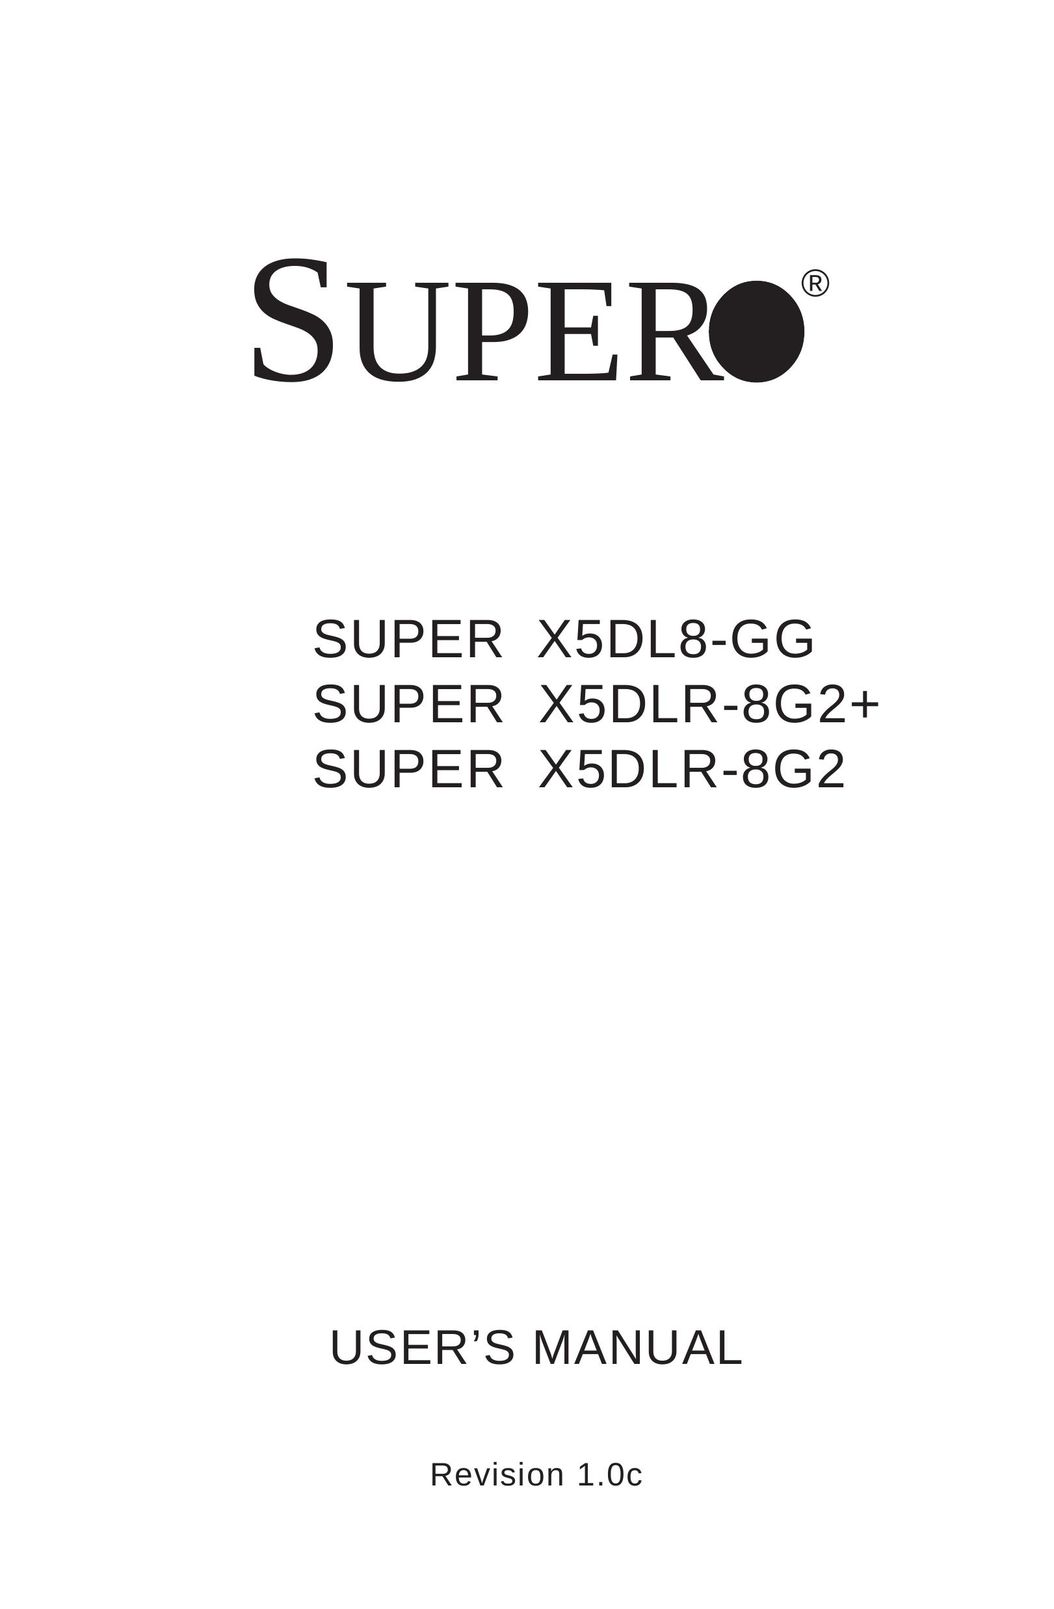 SUPER MICRO Computer SUPER X5DLR-8G2 Computer Hardware User Manual